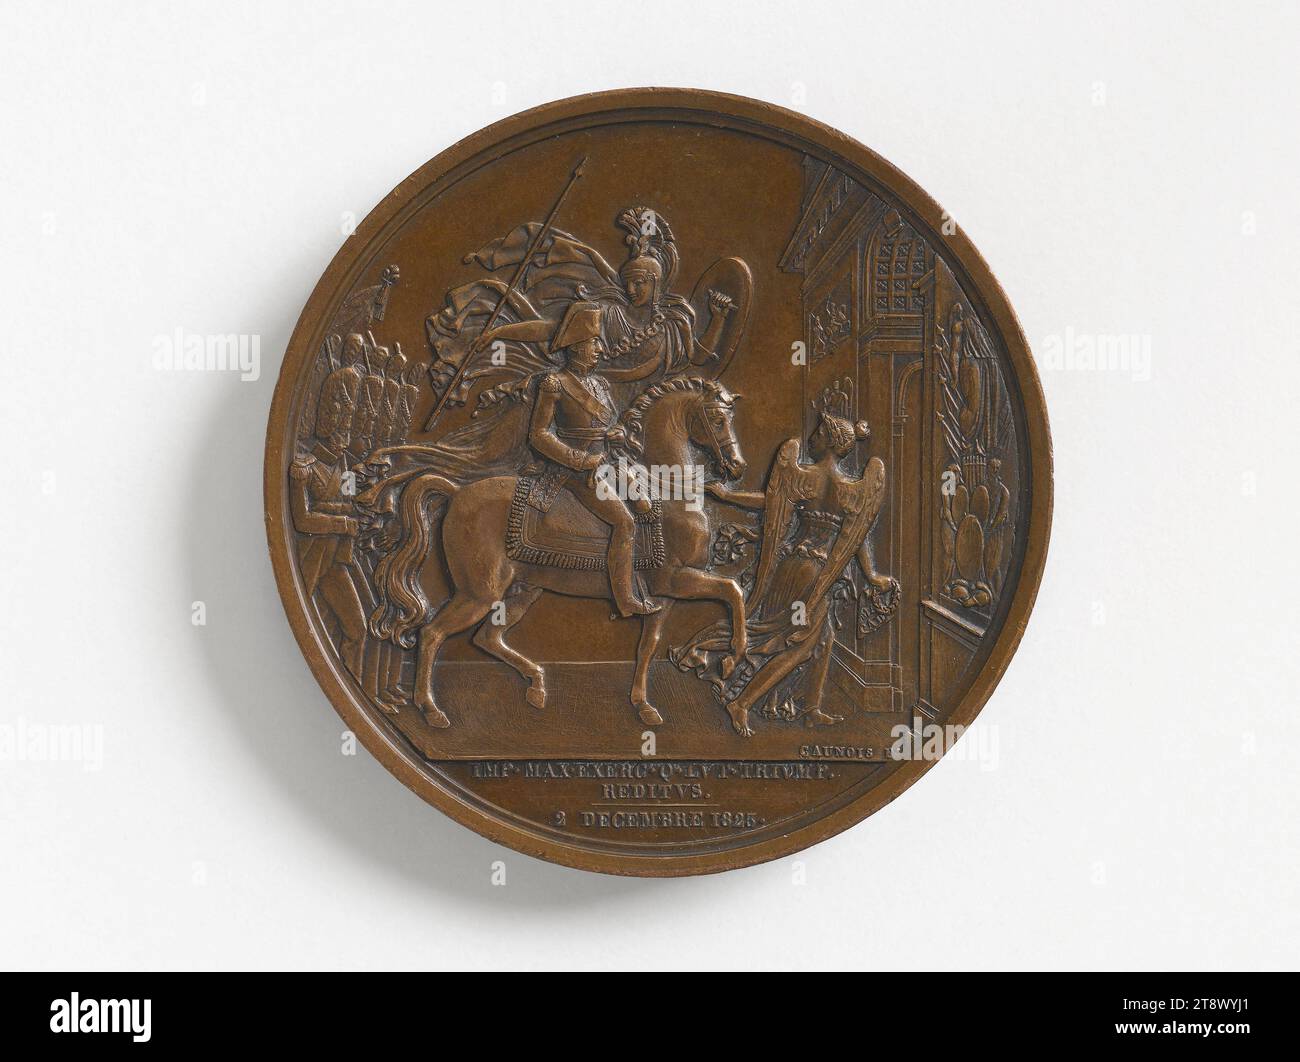 Return of the Duke of Angoulême to Paris, December 2, 1823, Caunois, François-Augustin, Engraver in medals, Array, Numismatics, Medal Stock Photo